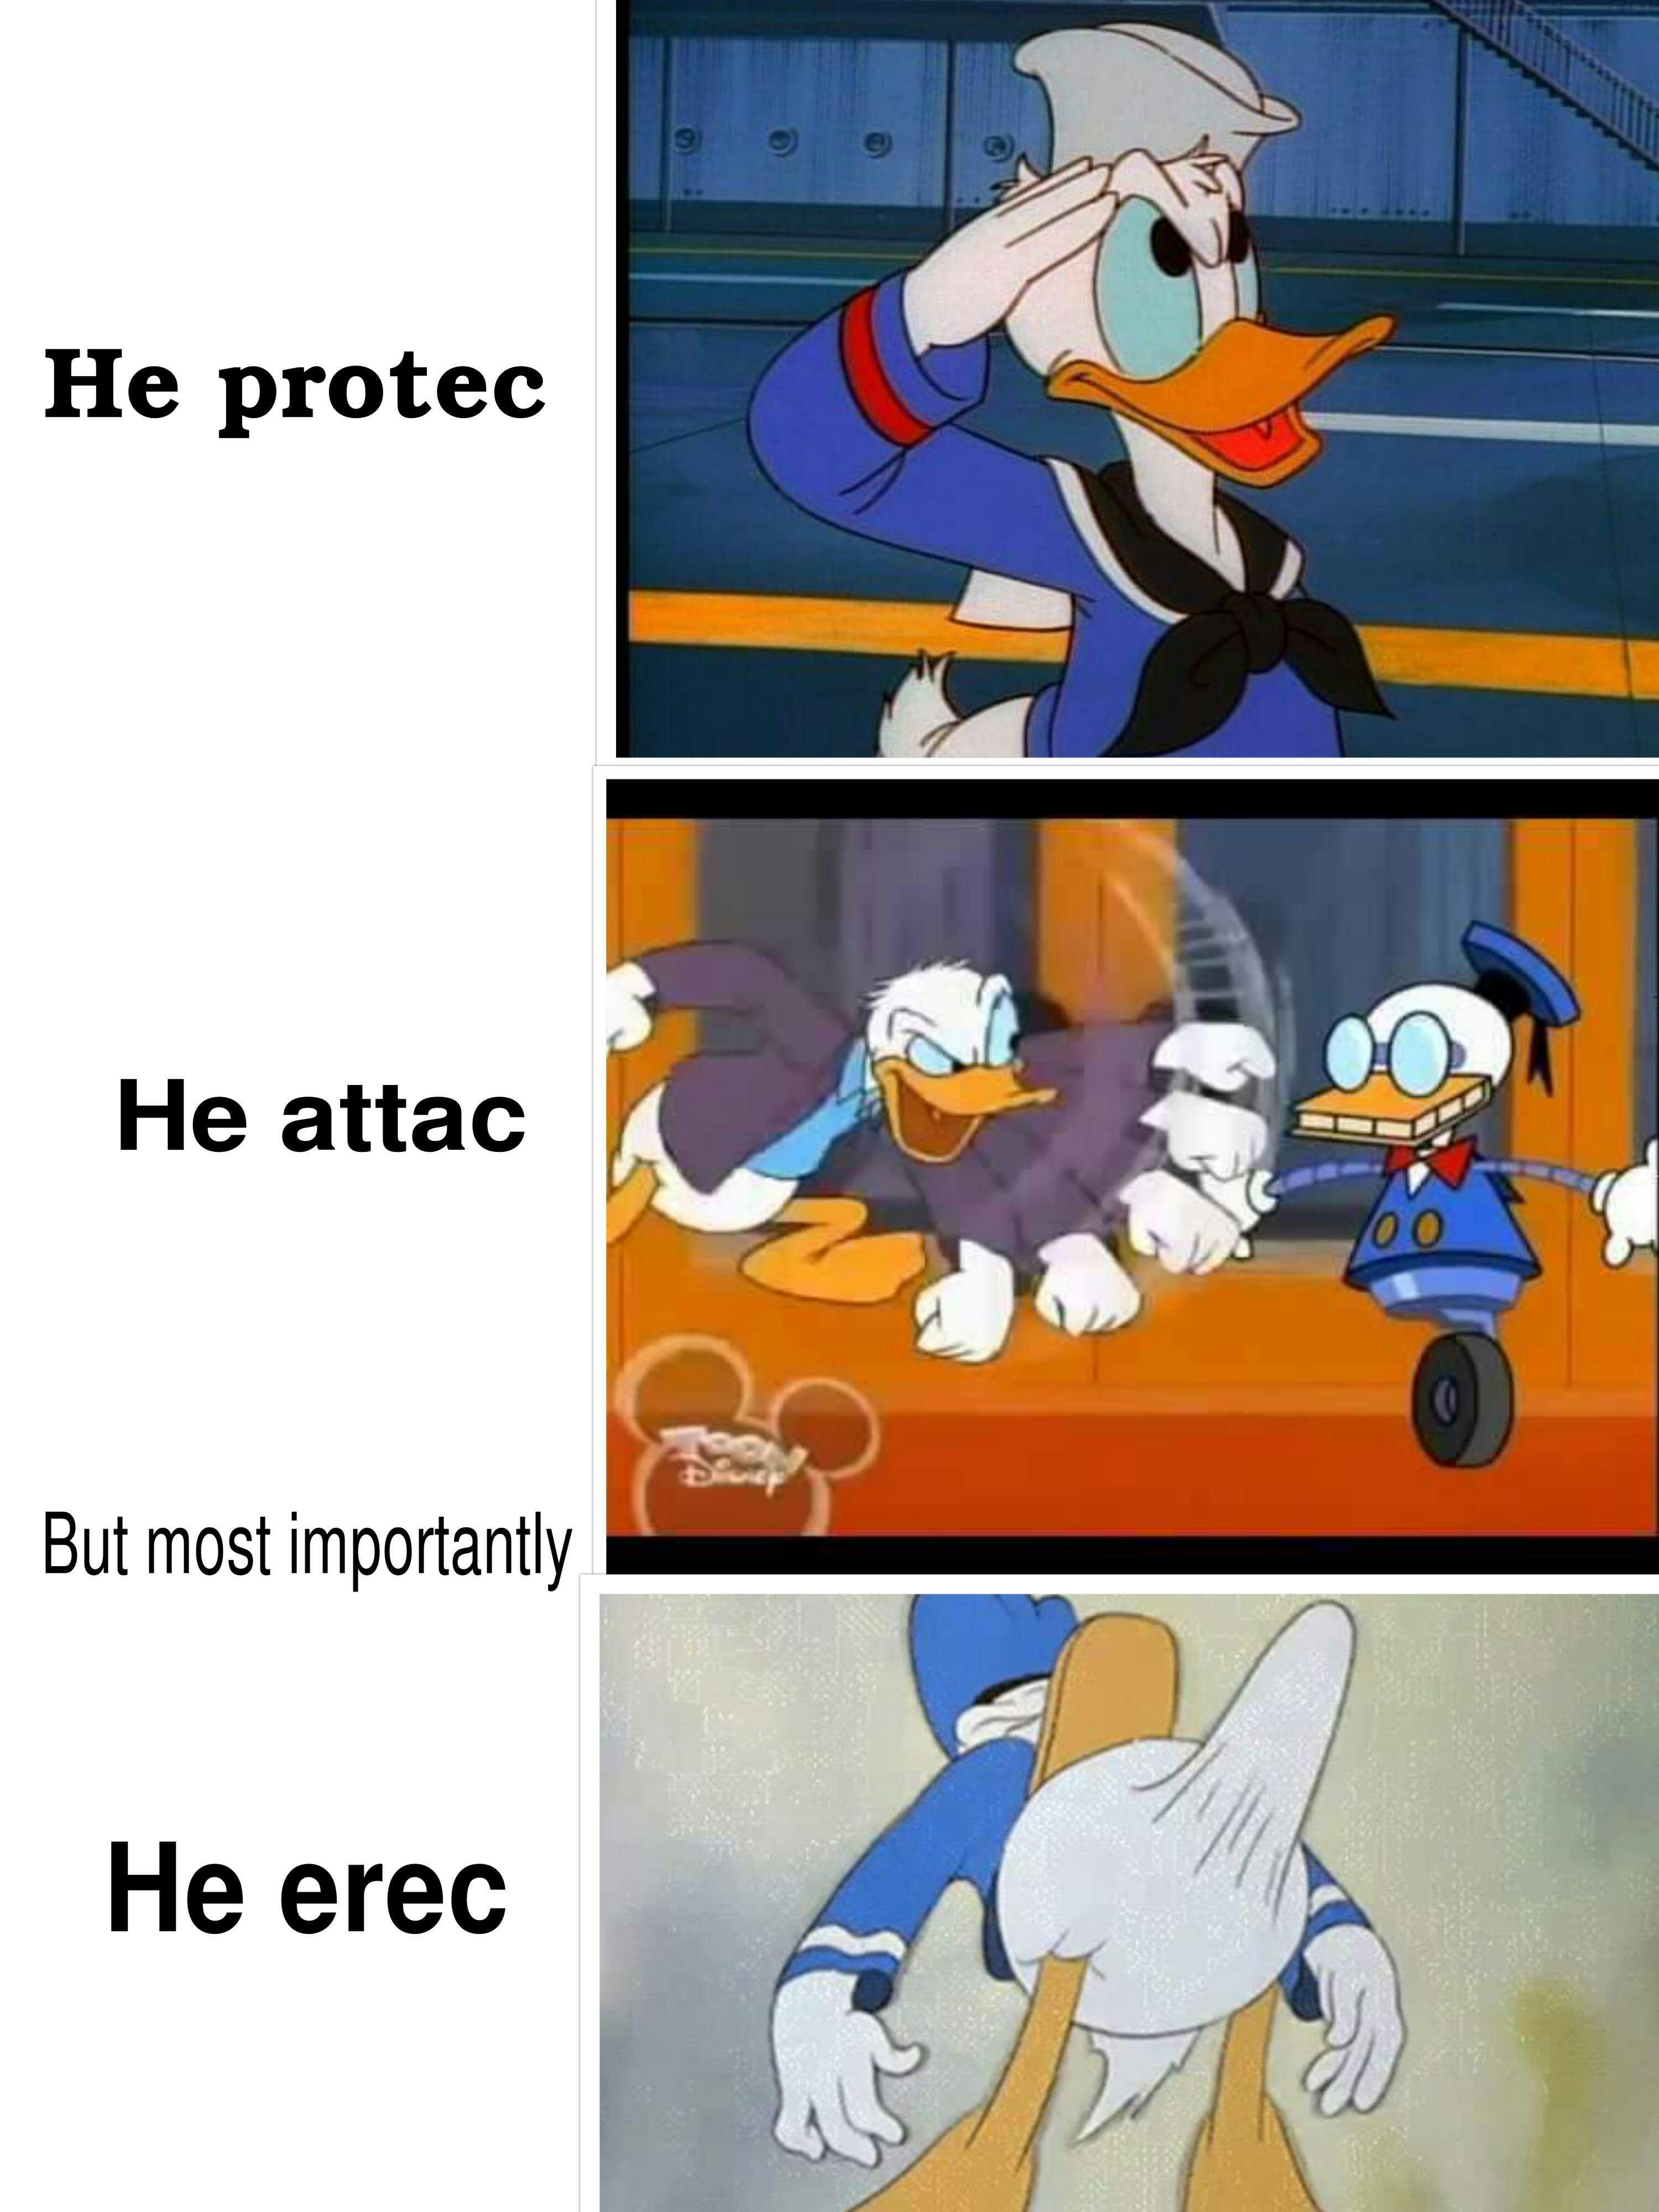 donald duck protec attac meme